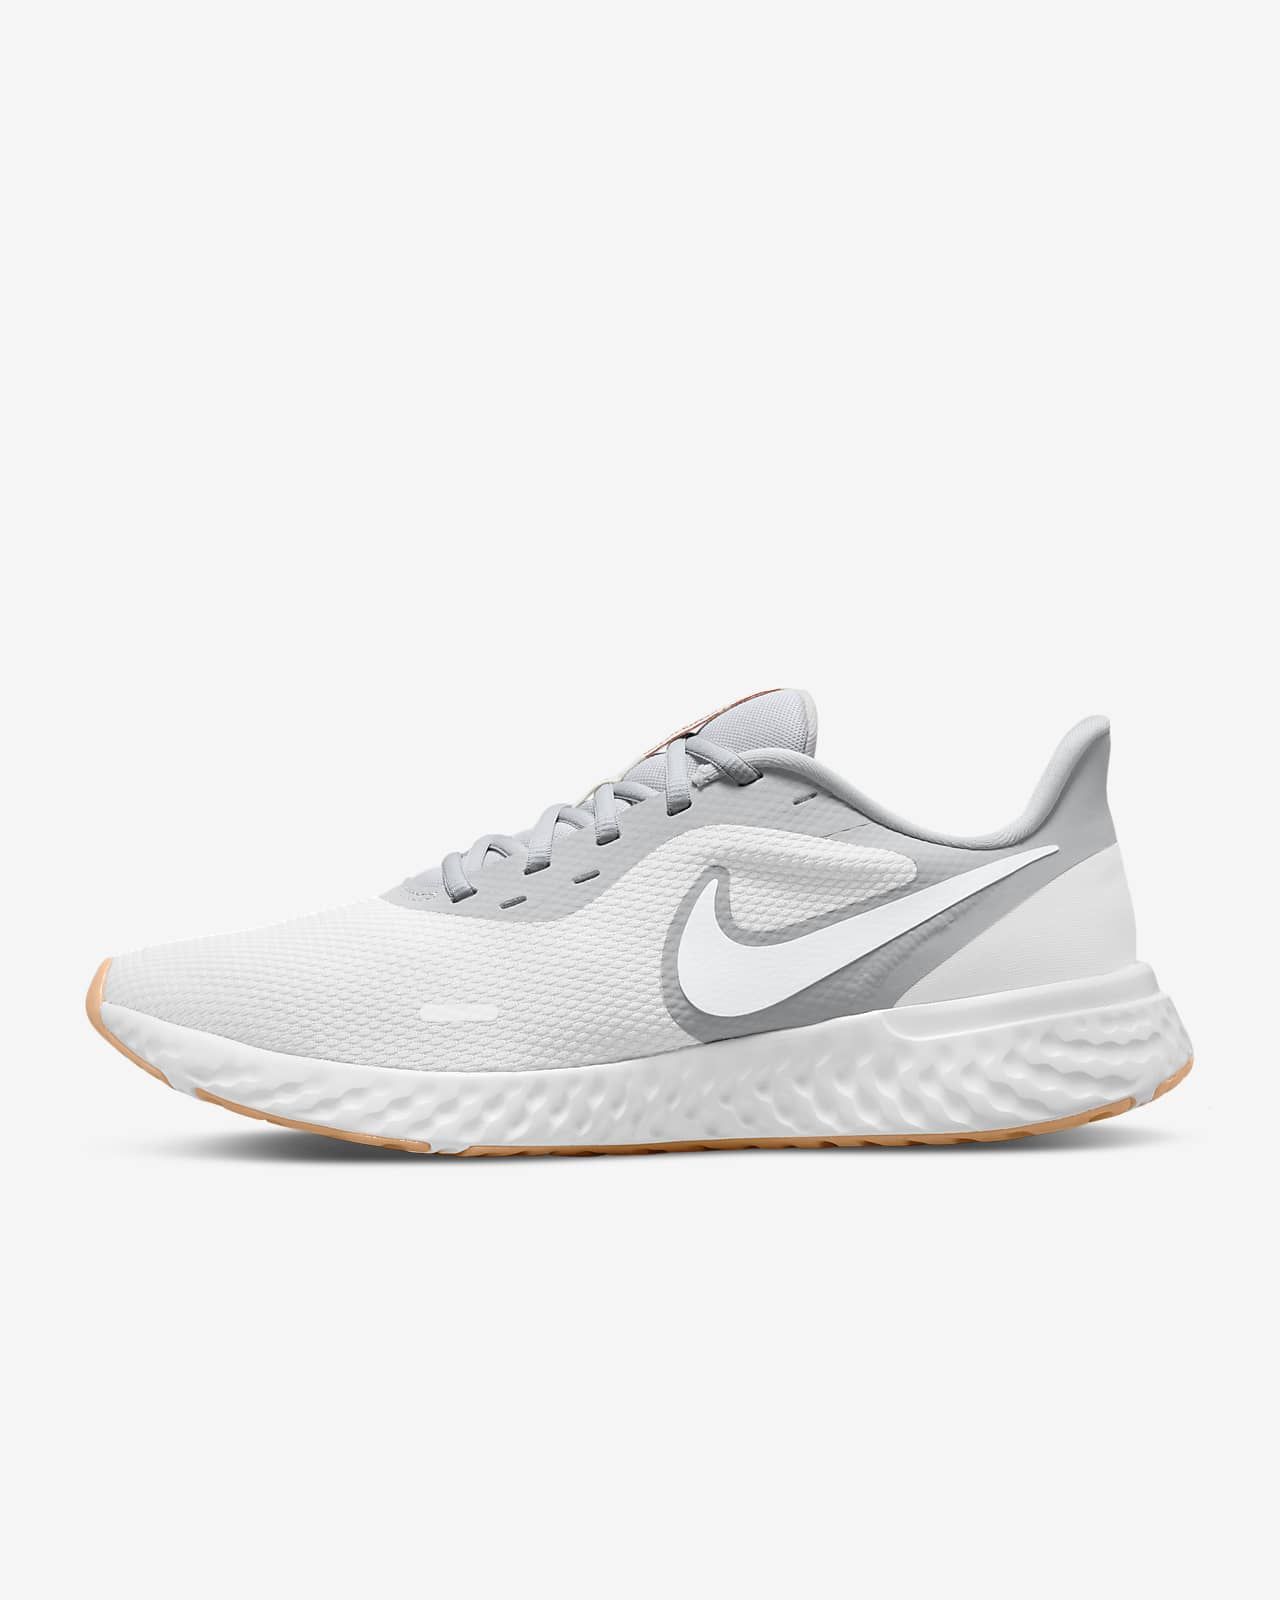 Nike Revolution 5Men's Road Running Shoes$65 | Nike (US)